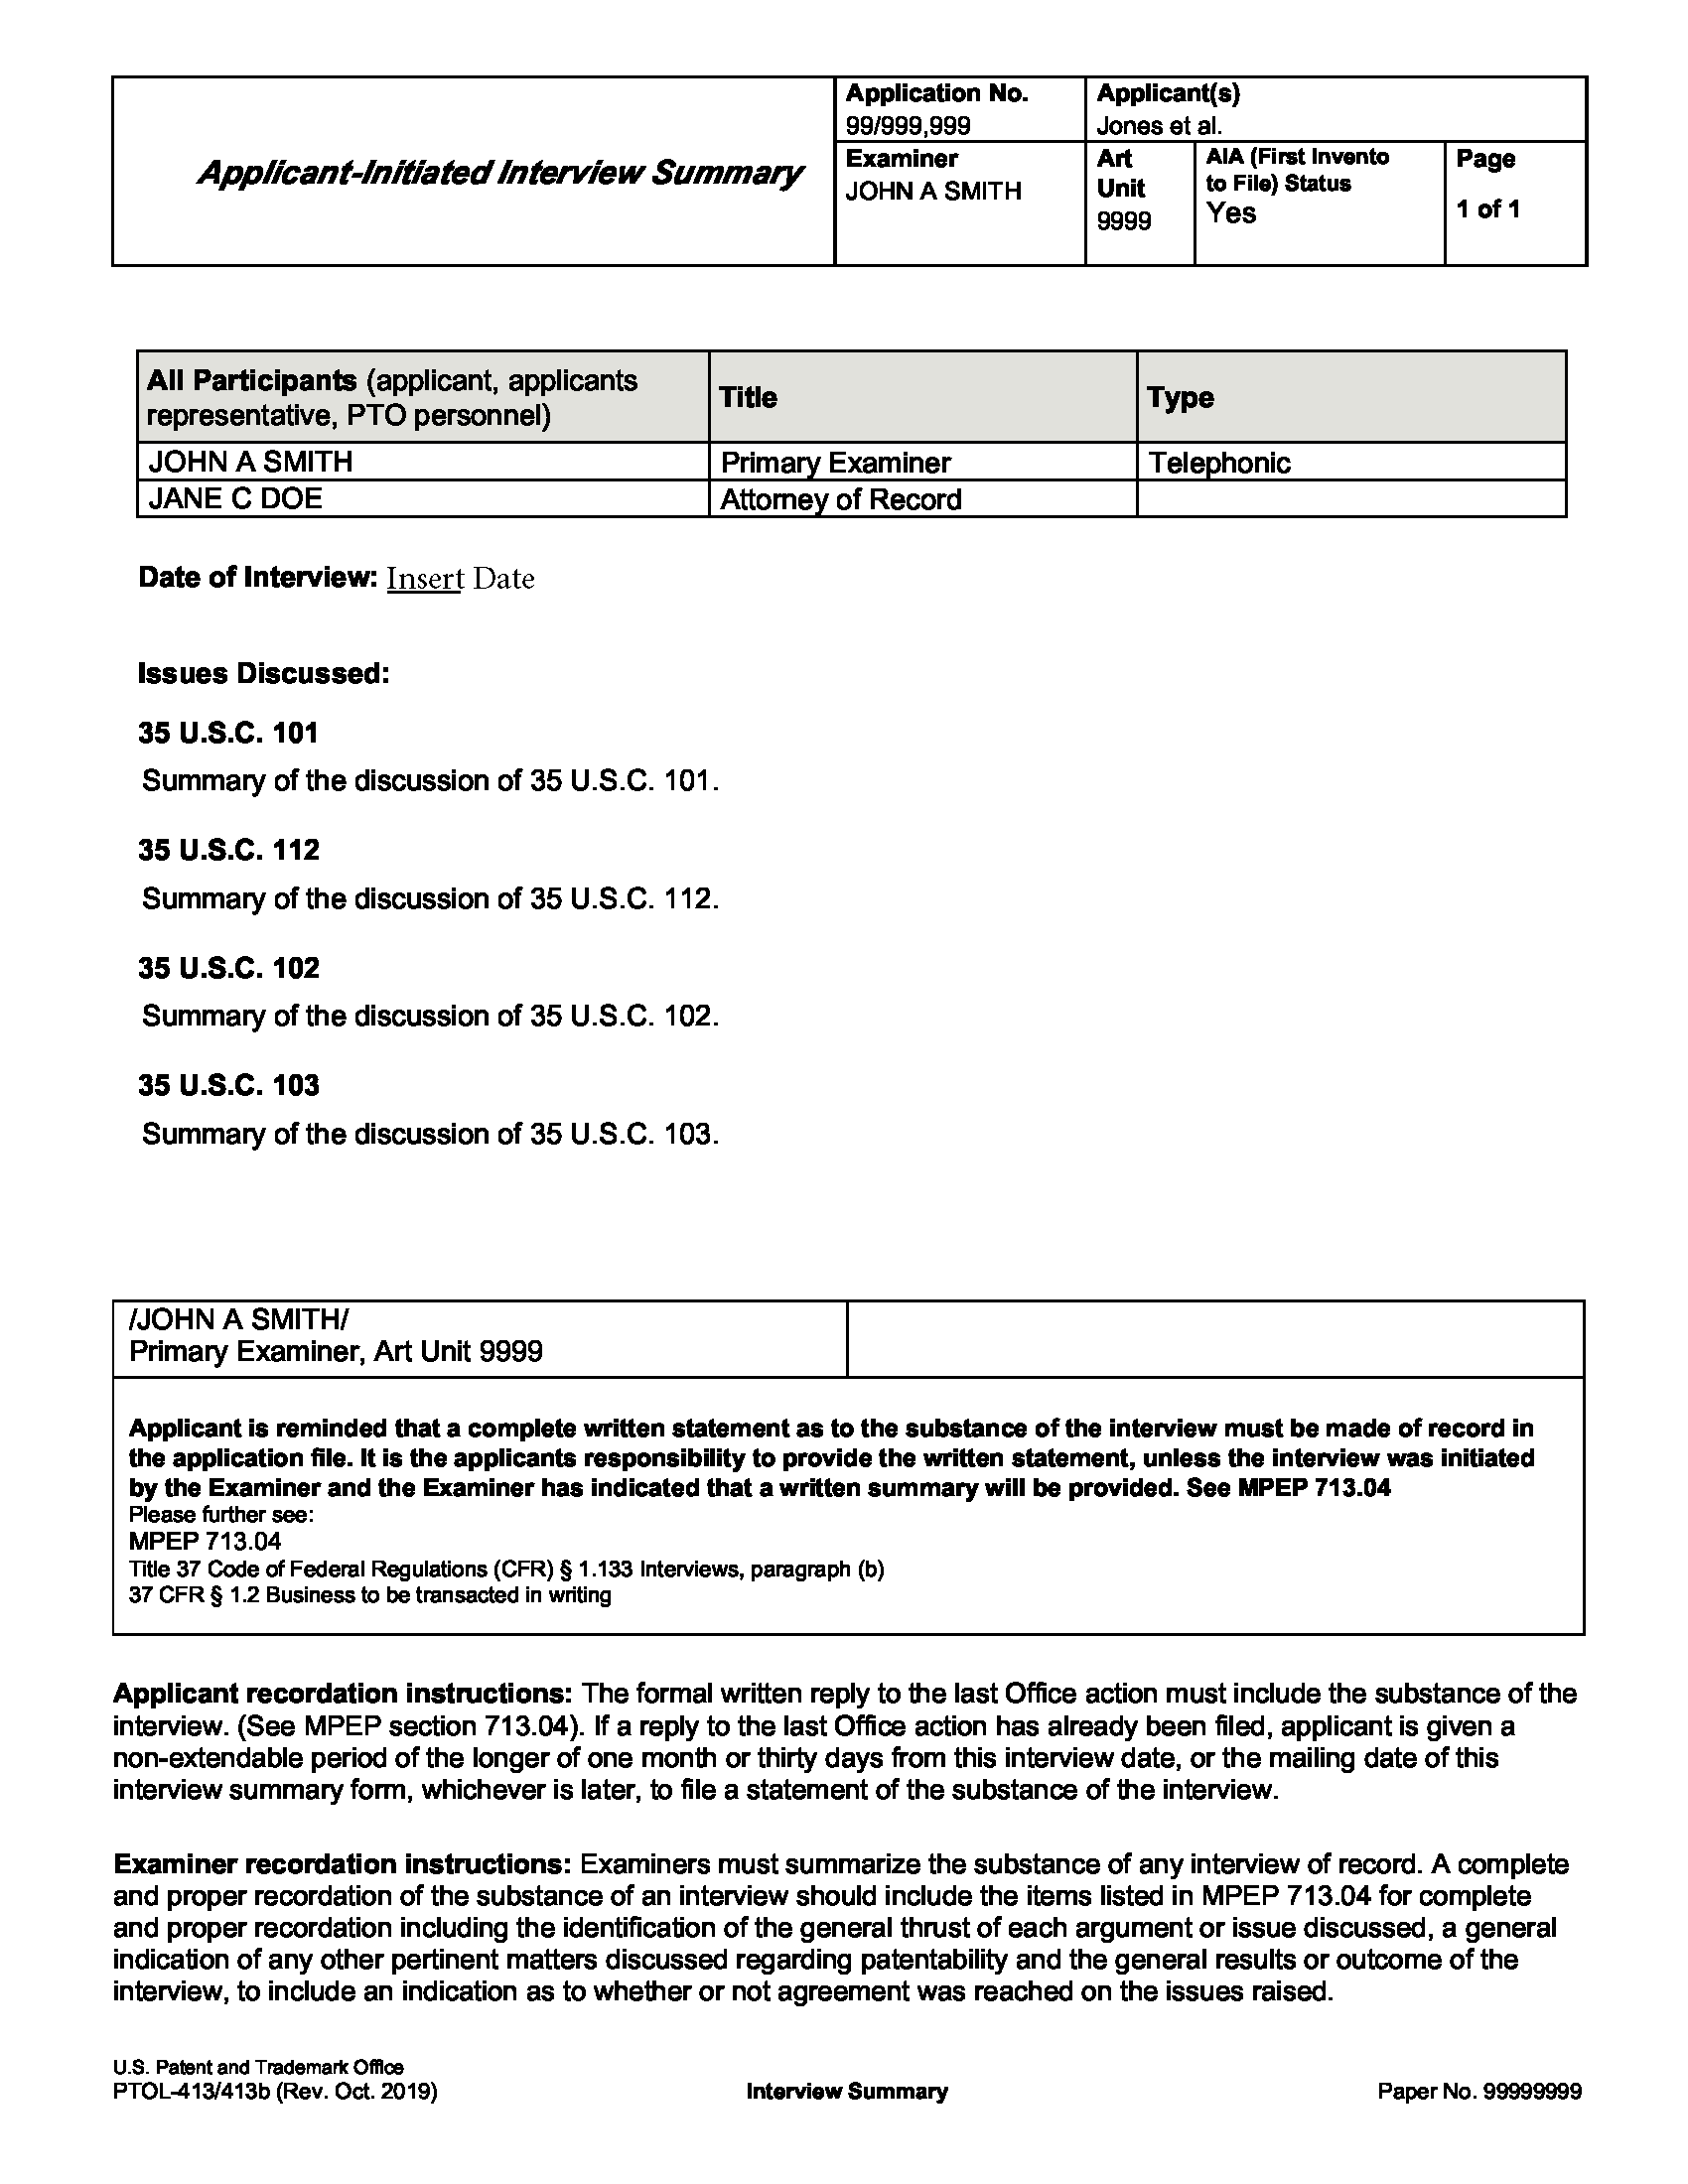 Sample PTOL-413/413b Applicant-Initiated